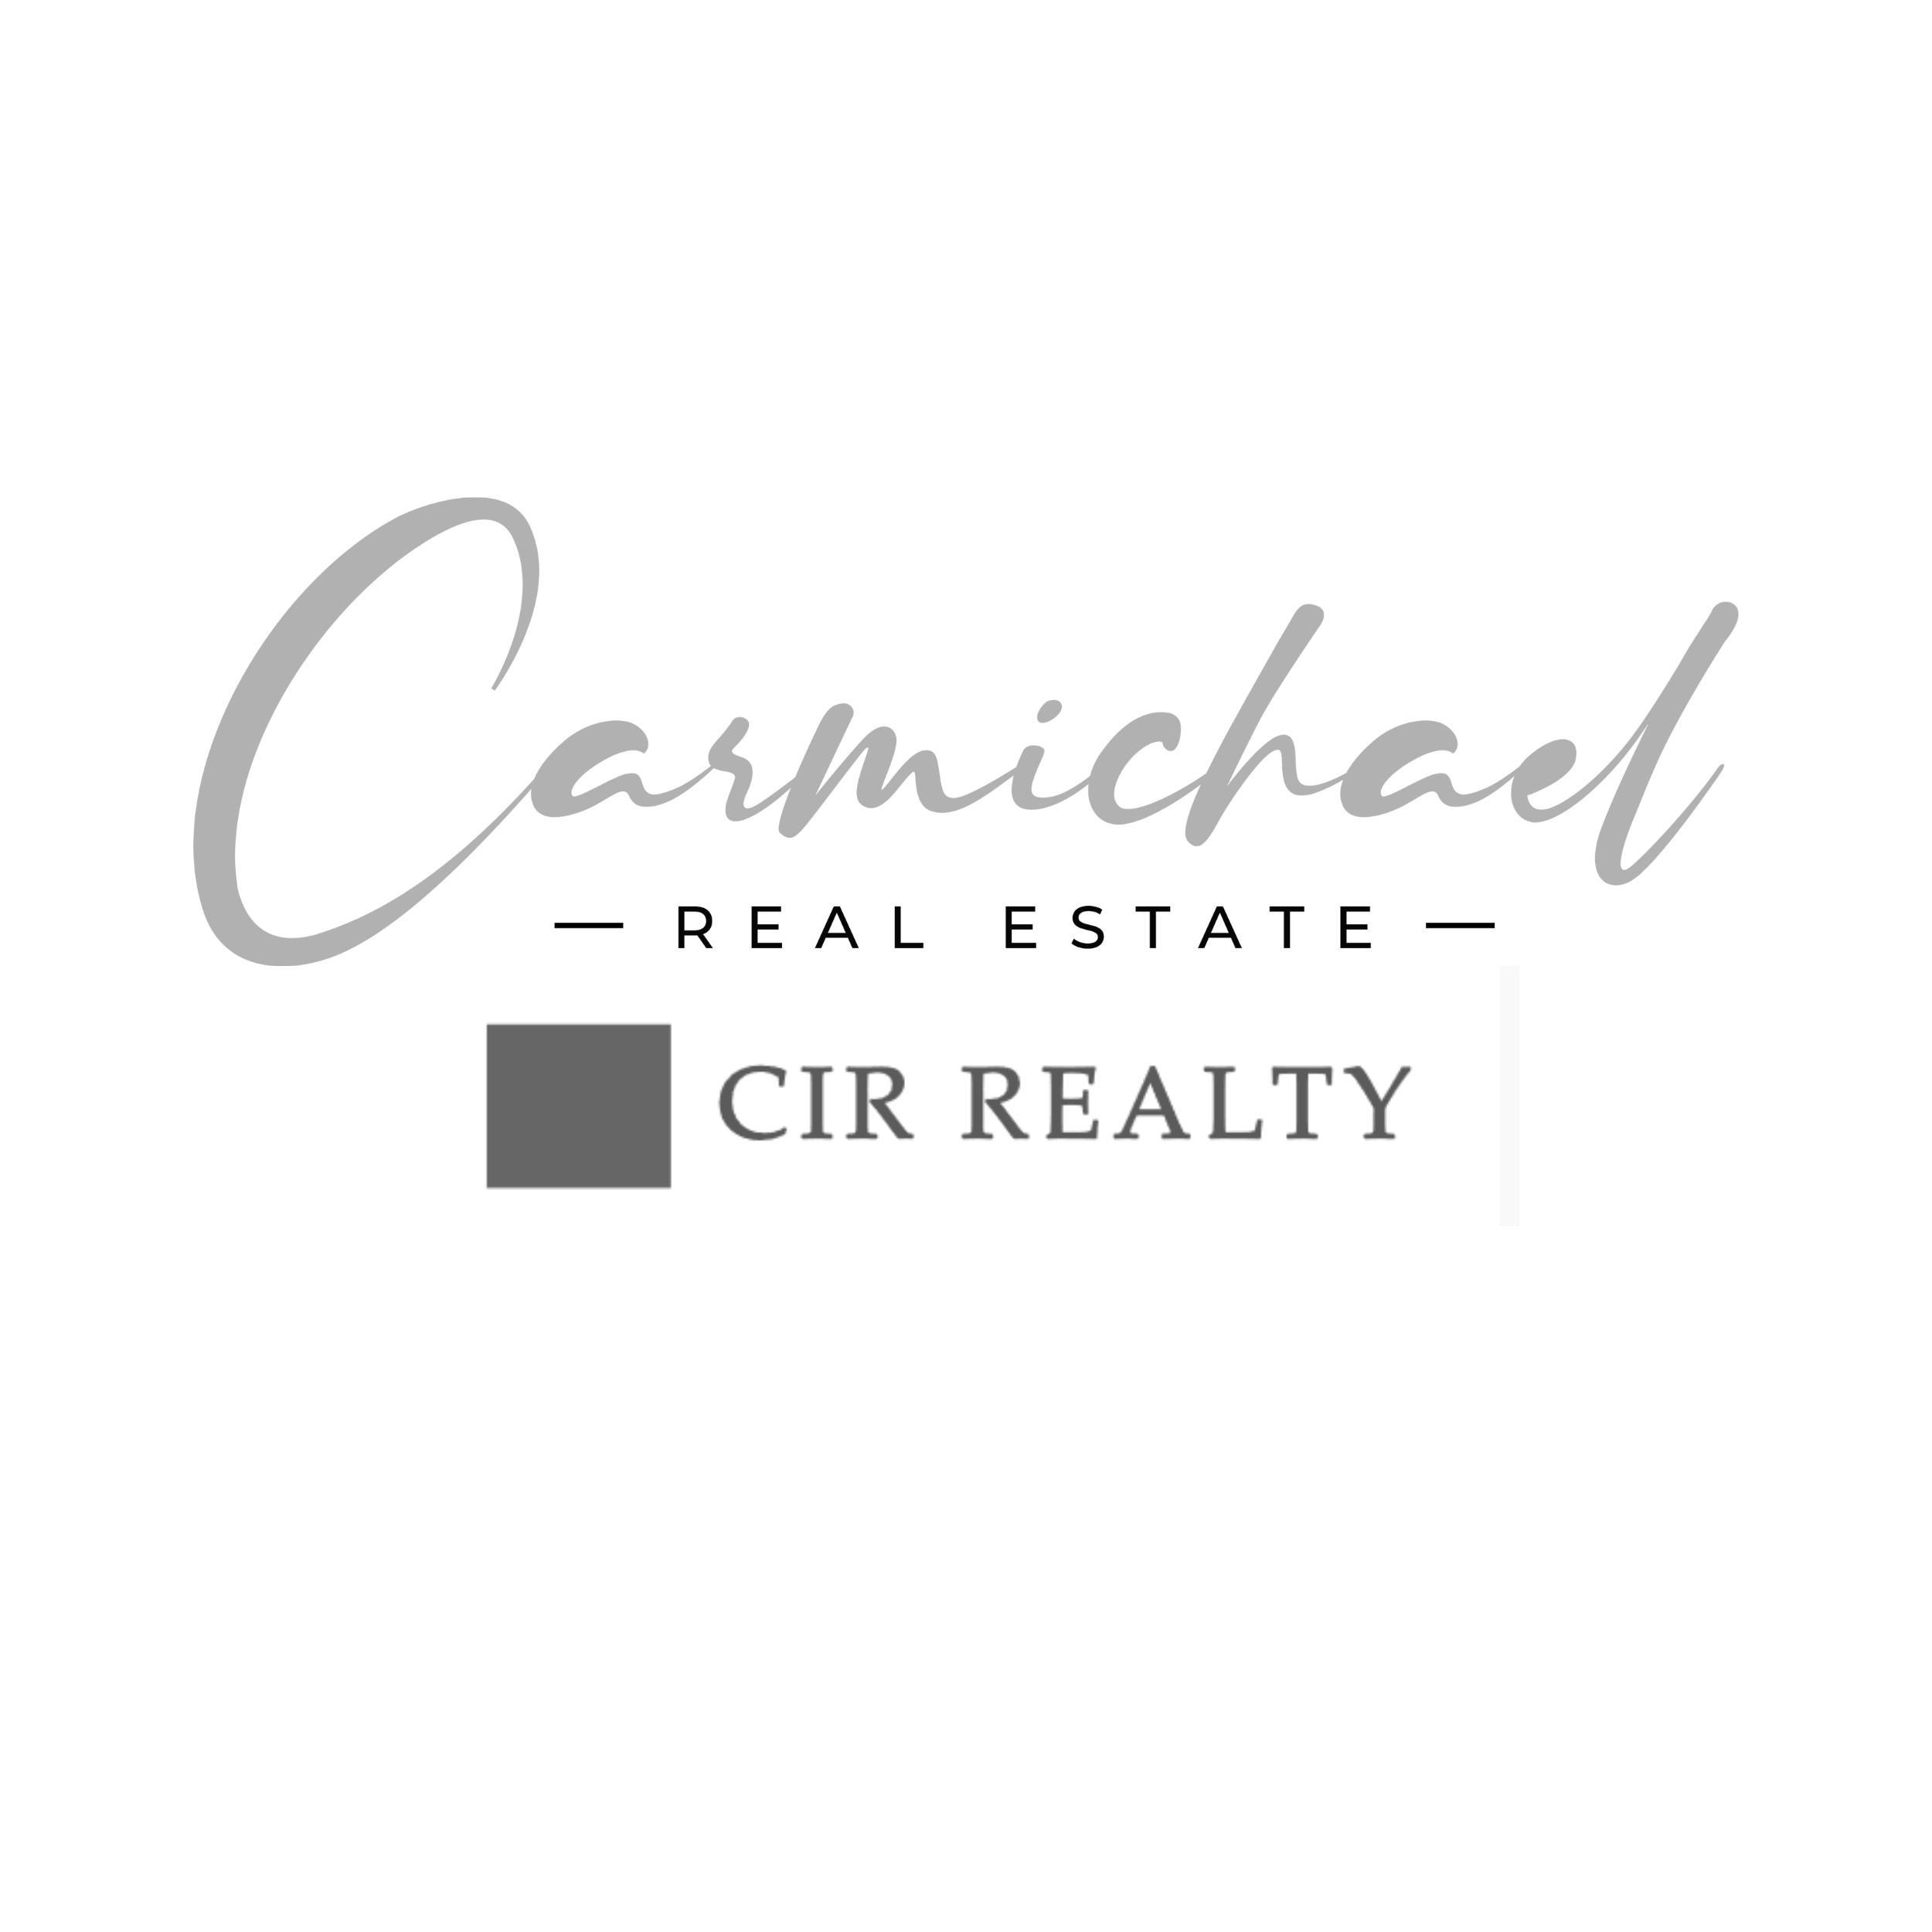 Carmichael Real estate logo\